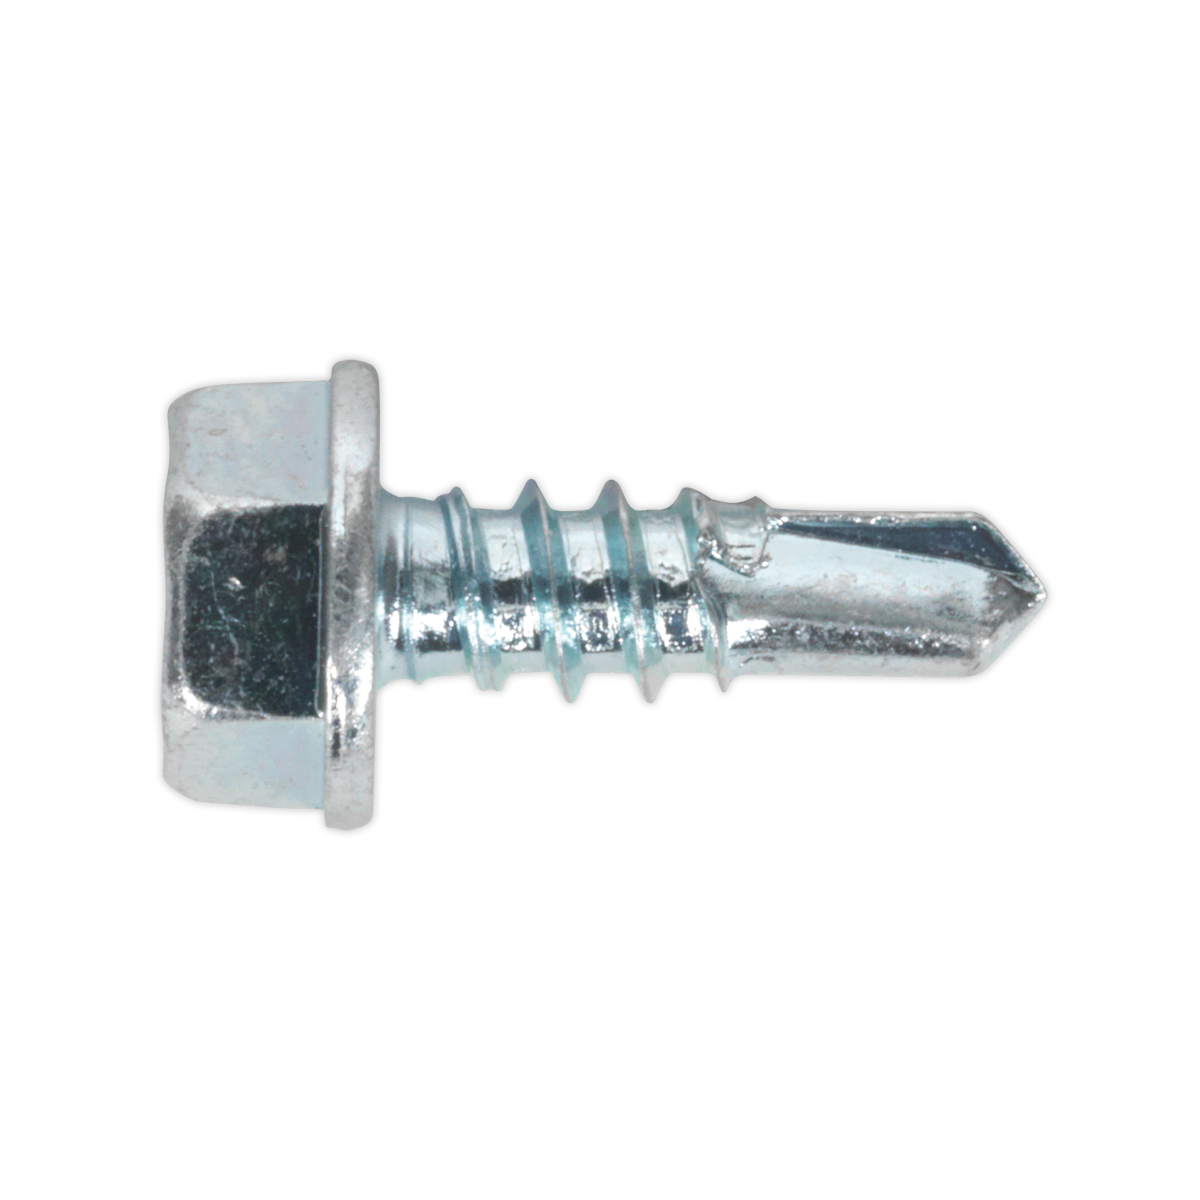 Self-Drilling Screw 4.2 x 13mm Hex Head Zinc Pack of 100 - SDHX4213 - Farming Parts